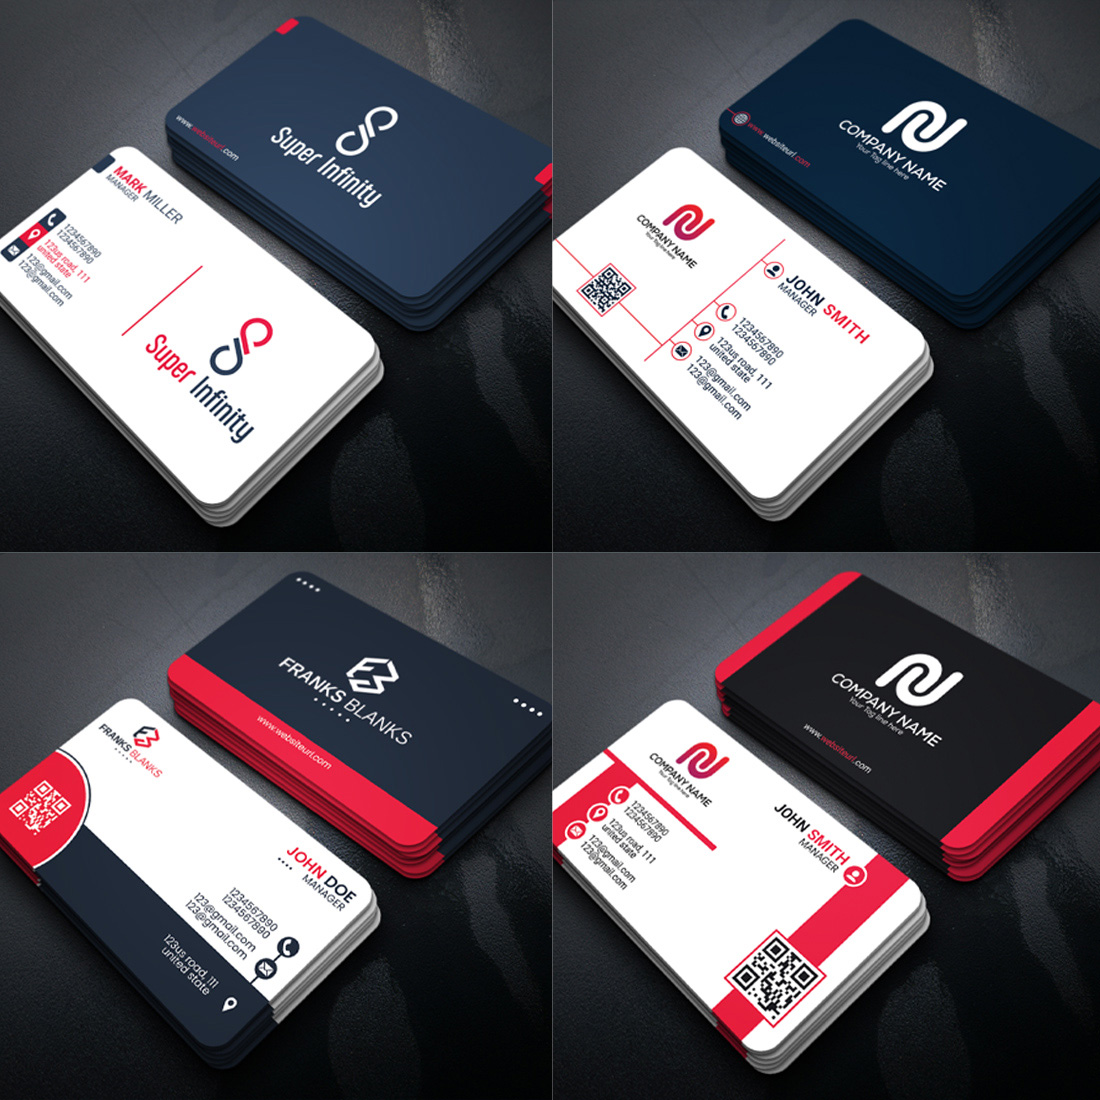 4 creative business card design bundle psd file preview image.